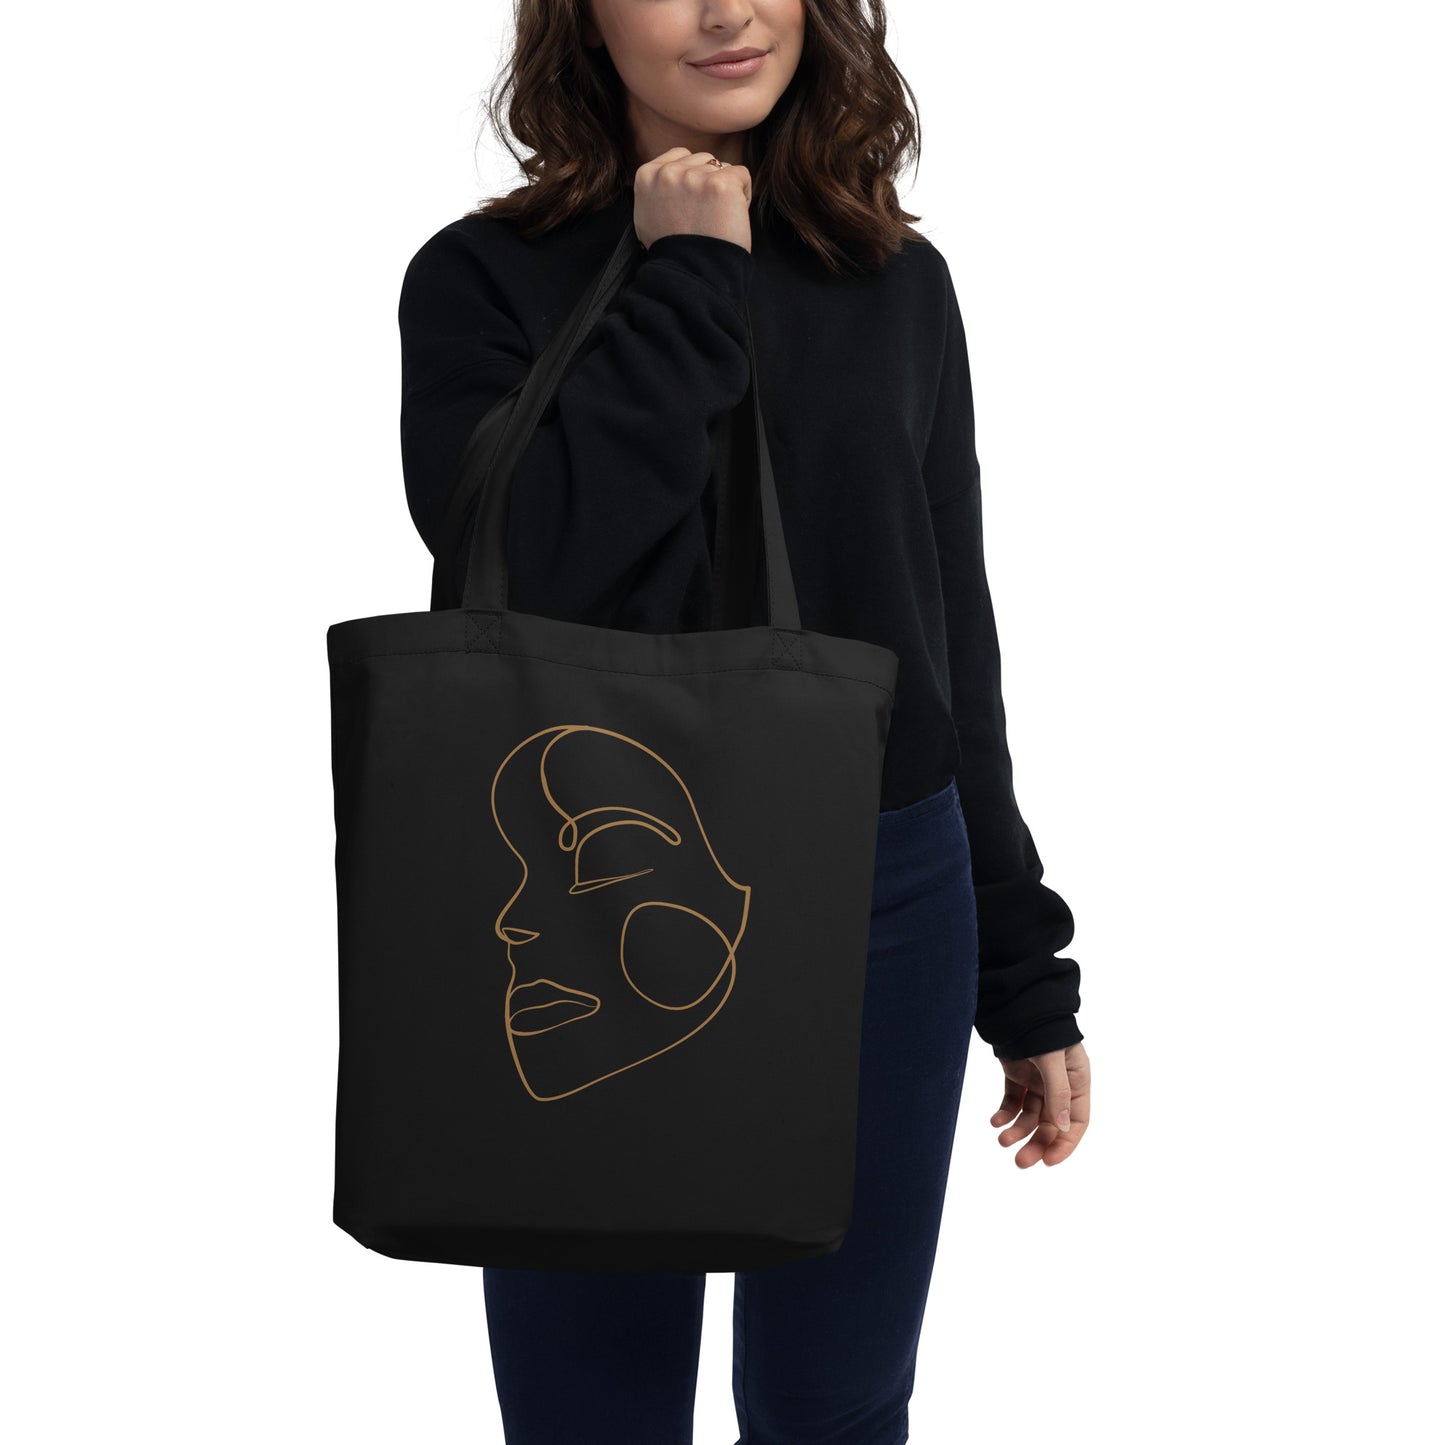 Woman OF God Eco Tote Bag - Black - Shopping Totes